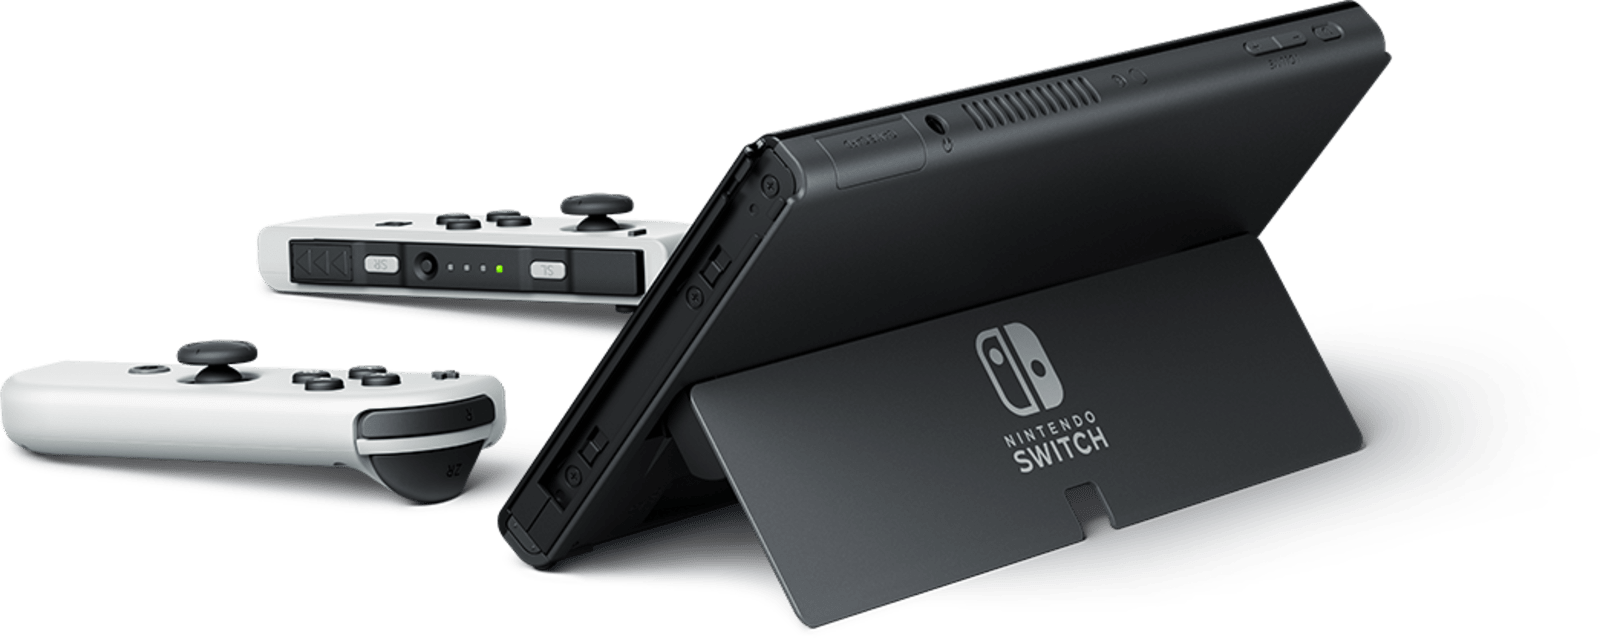  Nintendo Switch Lebanon